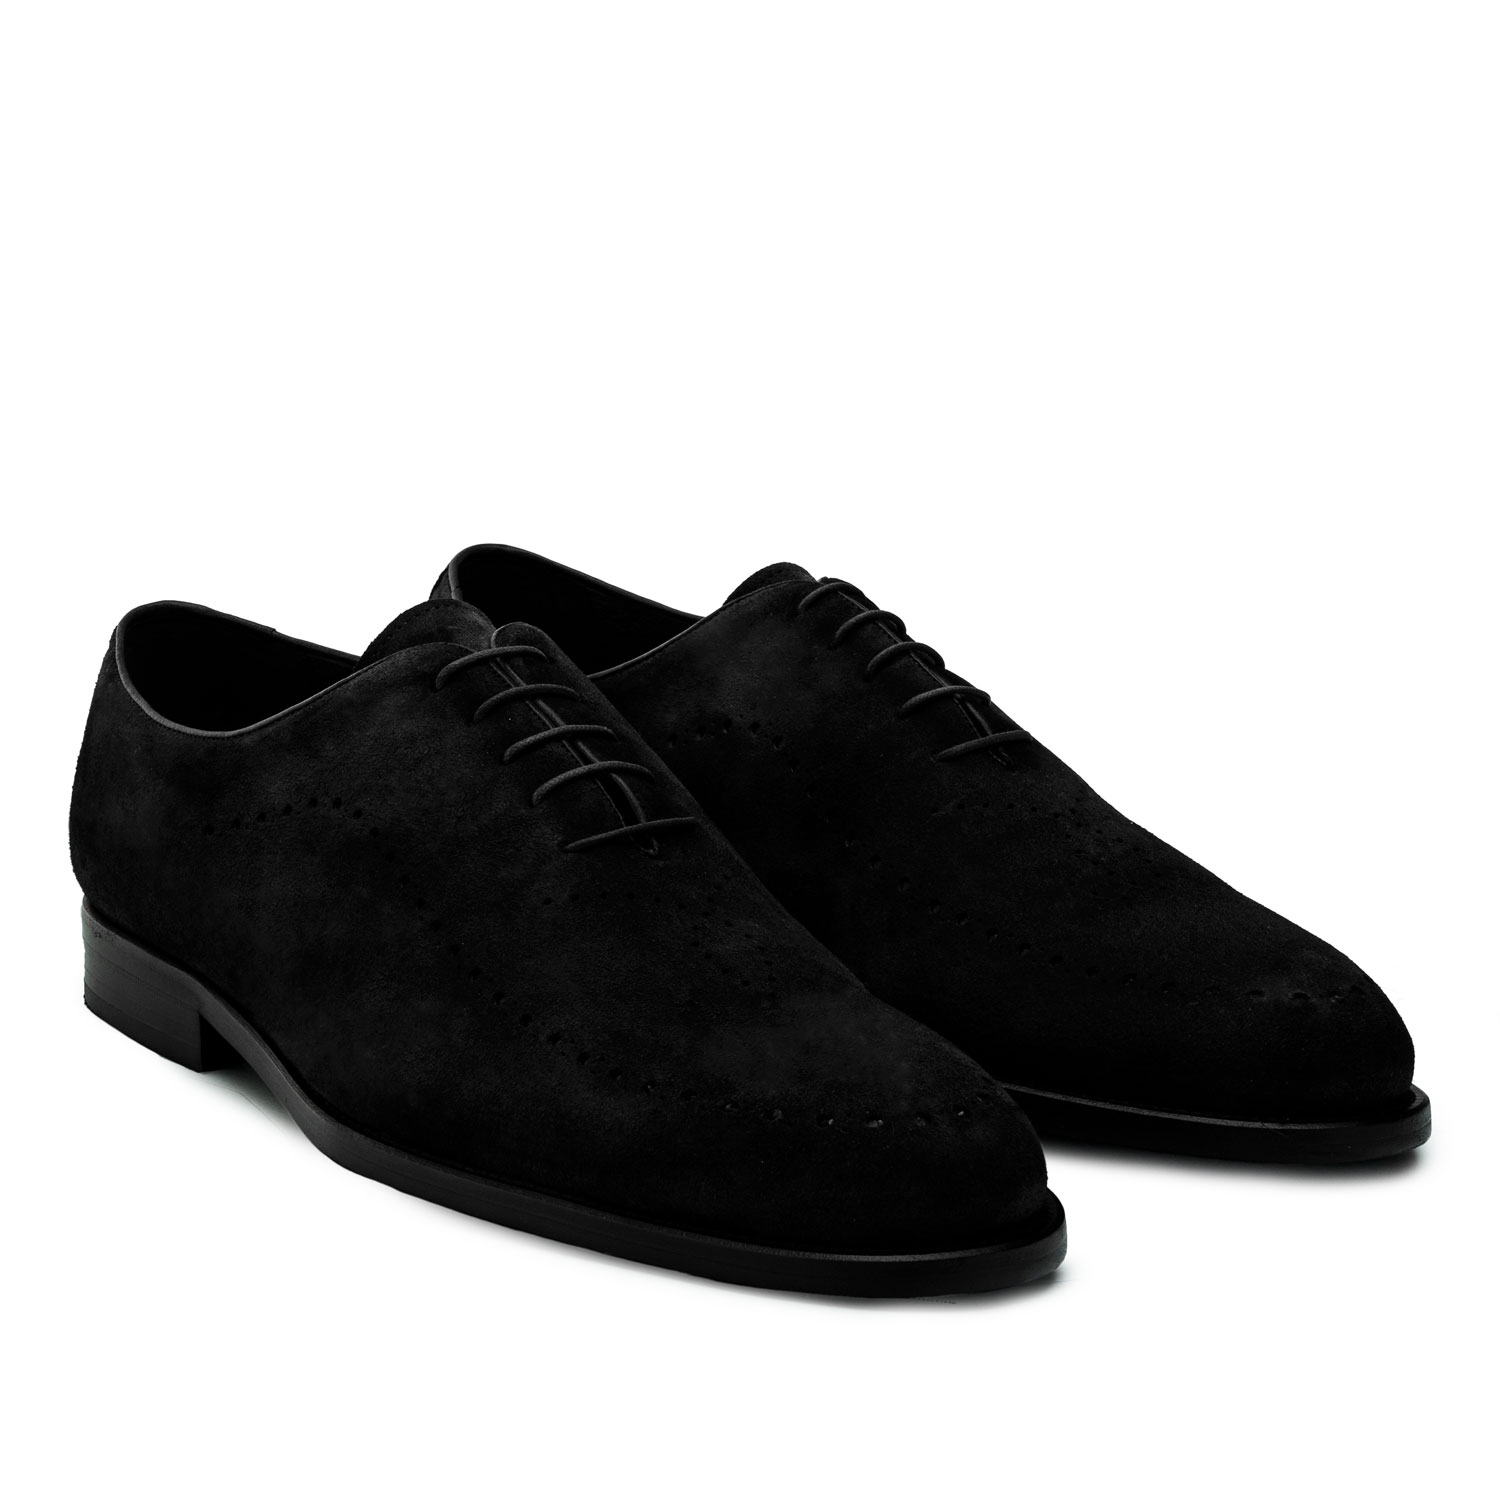 Men's Dress Shoes in Black Split Leather 